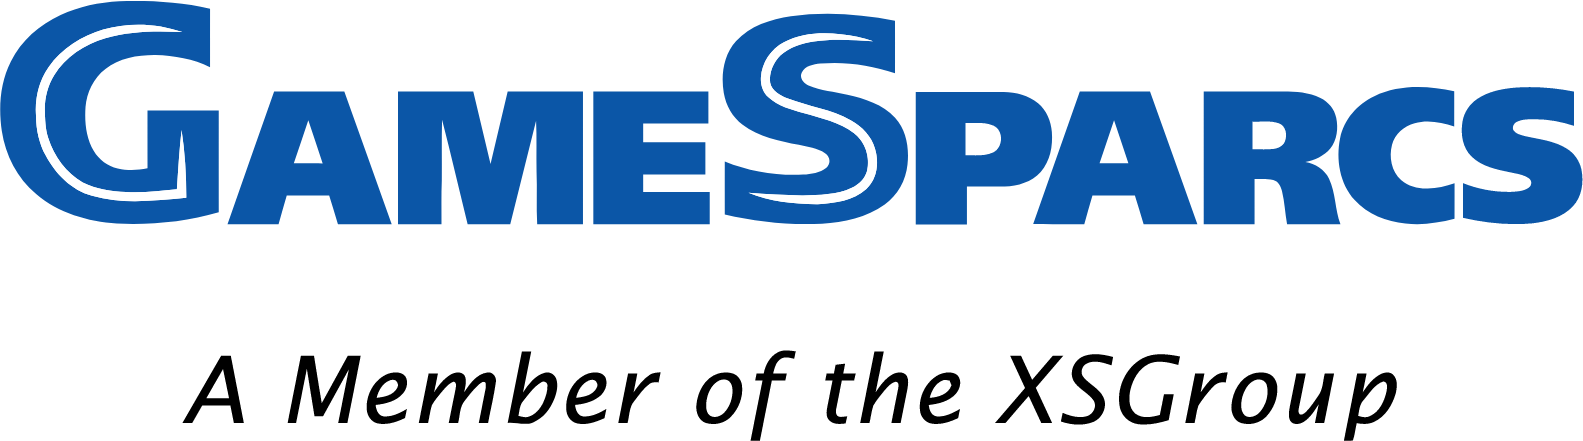 Gamesparcs logo large (transparent PNG)